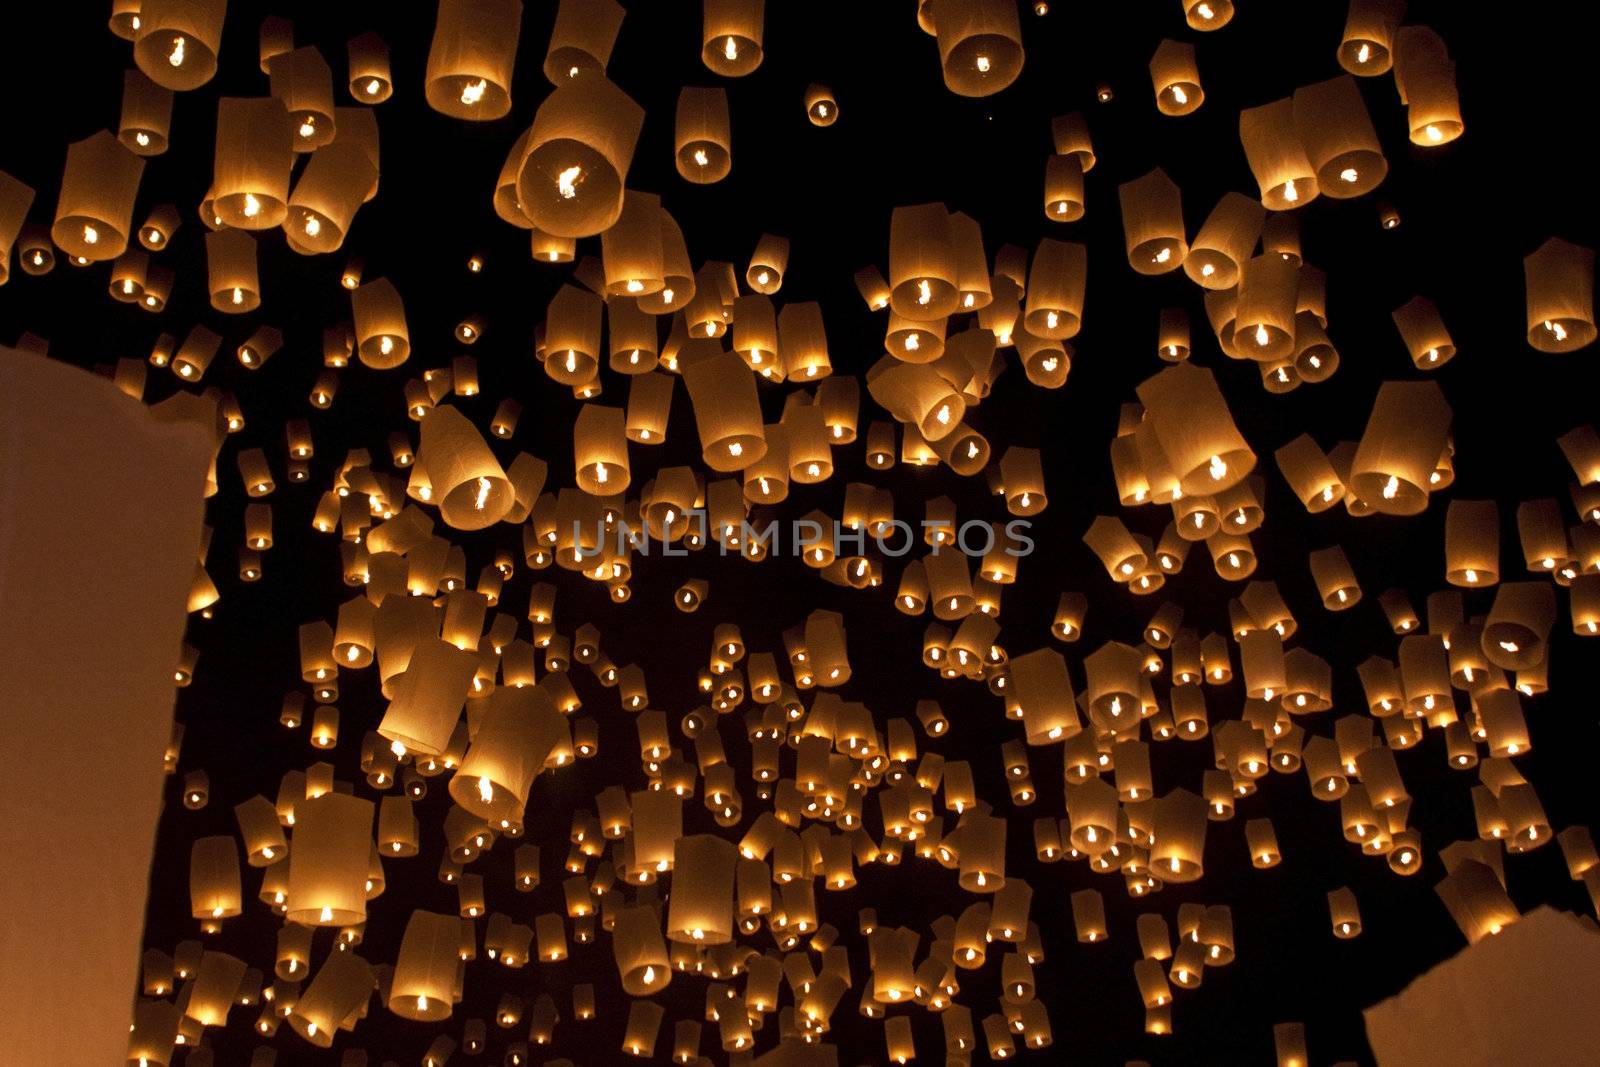 Sky lanterns firework festival,Chiangmai ,Thailand by Yuri2012